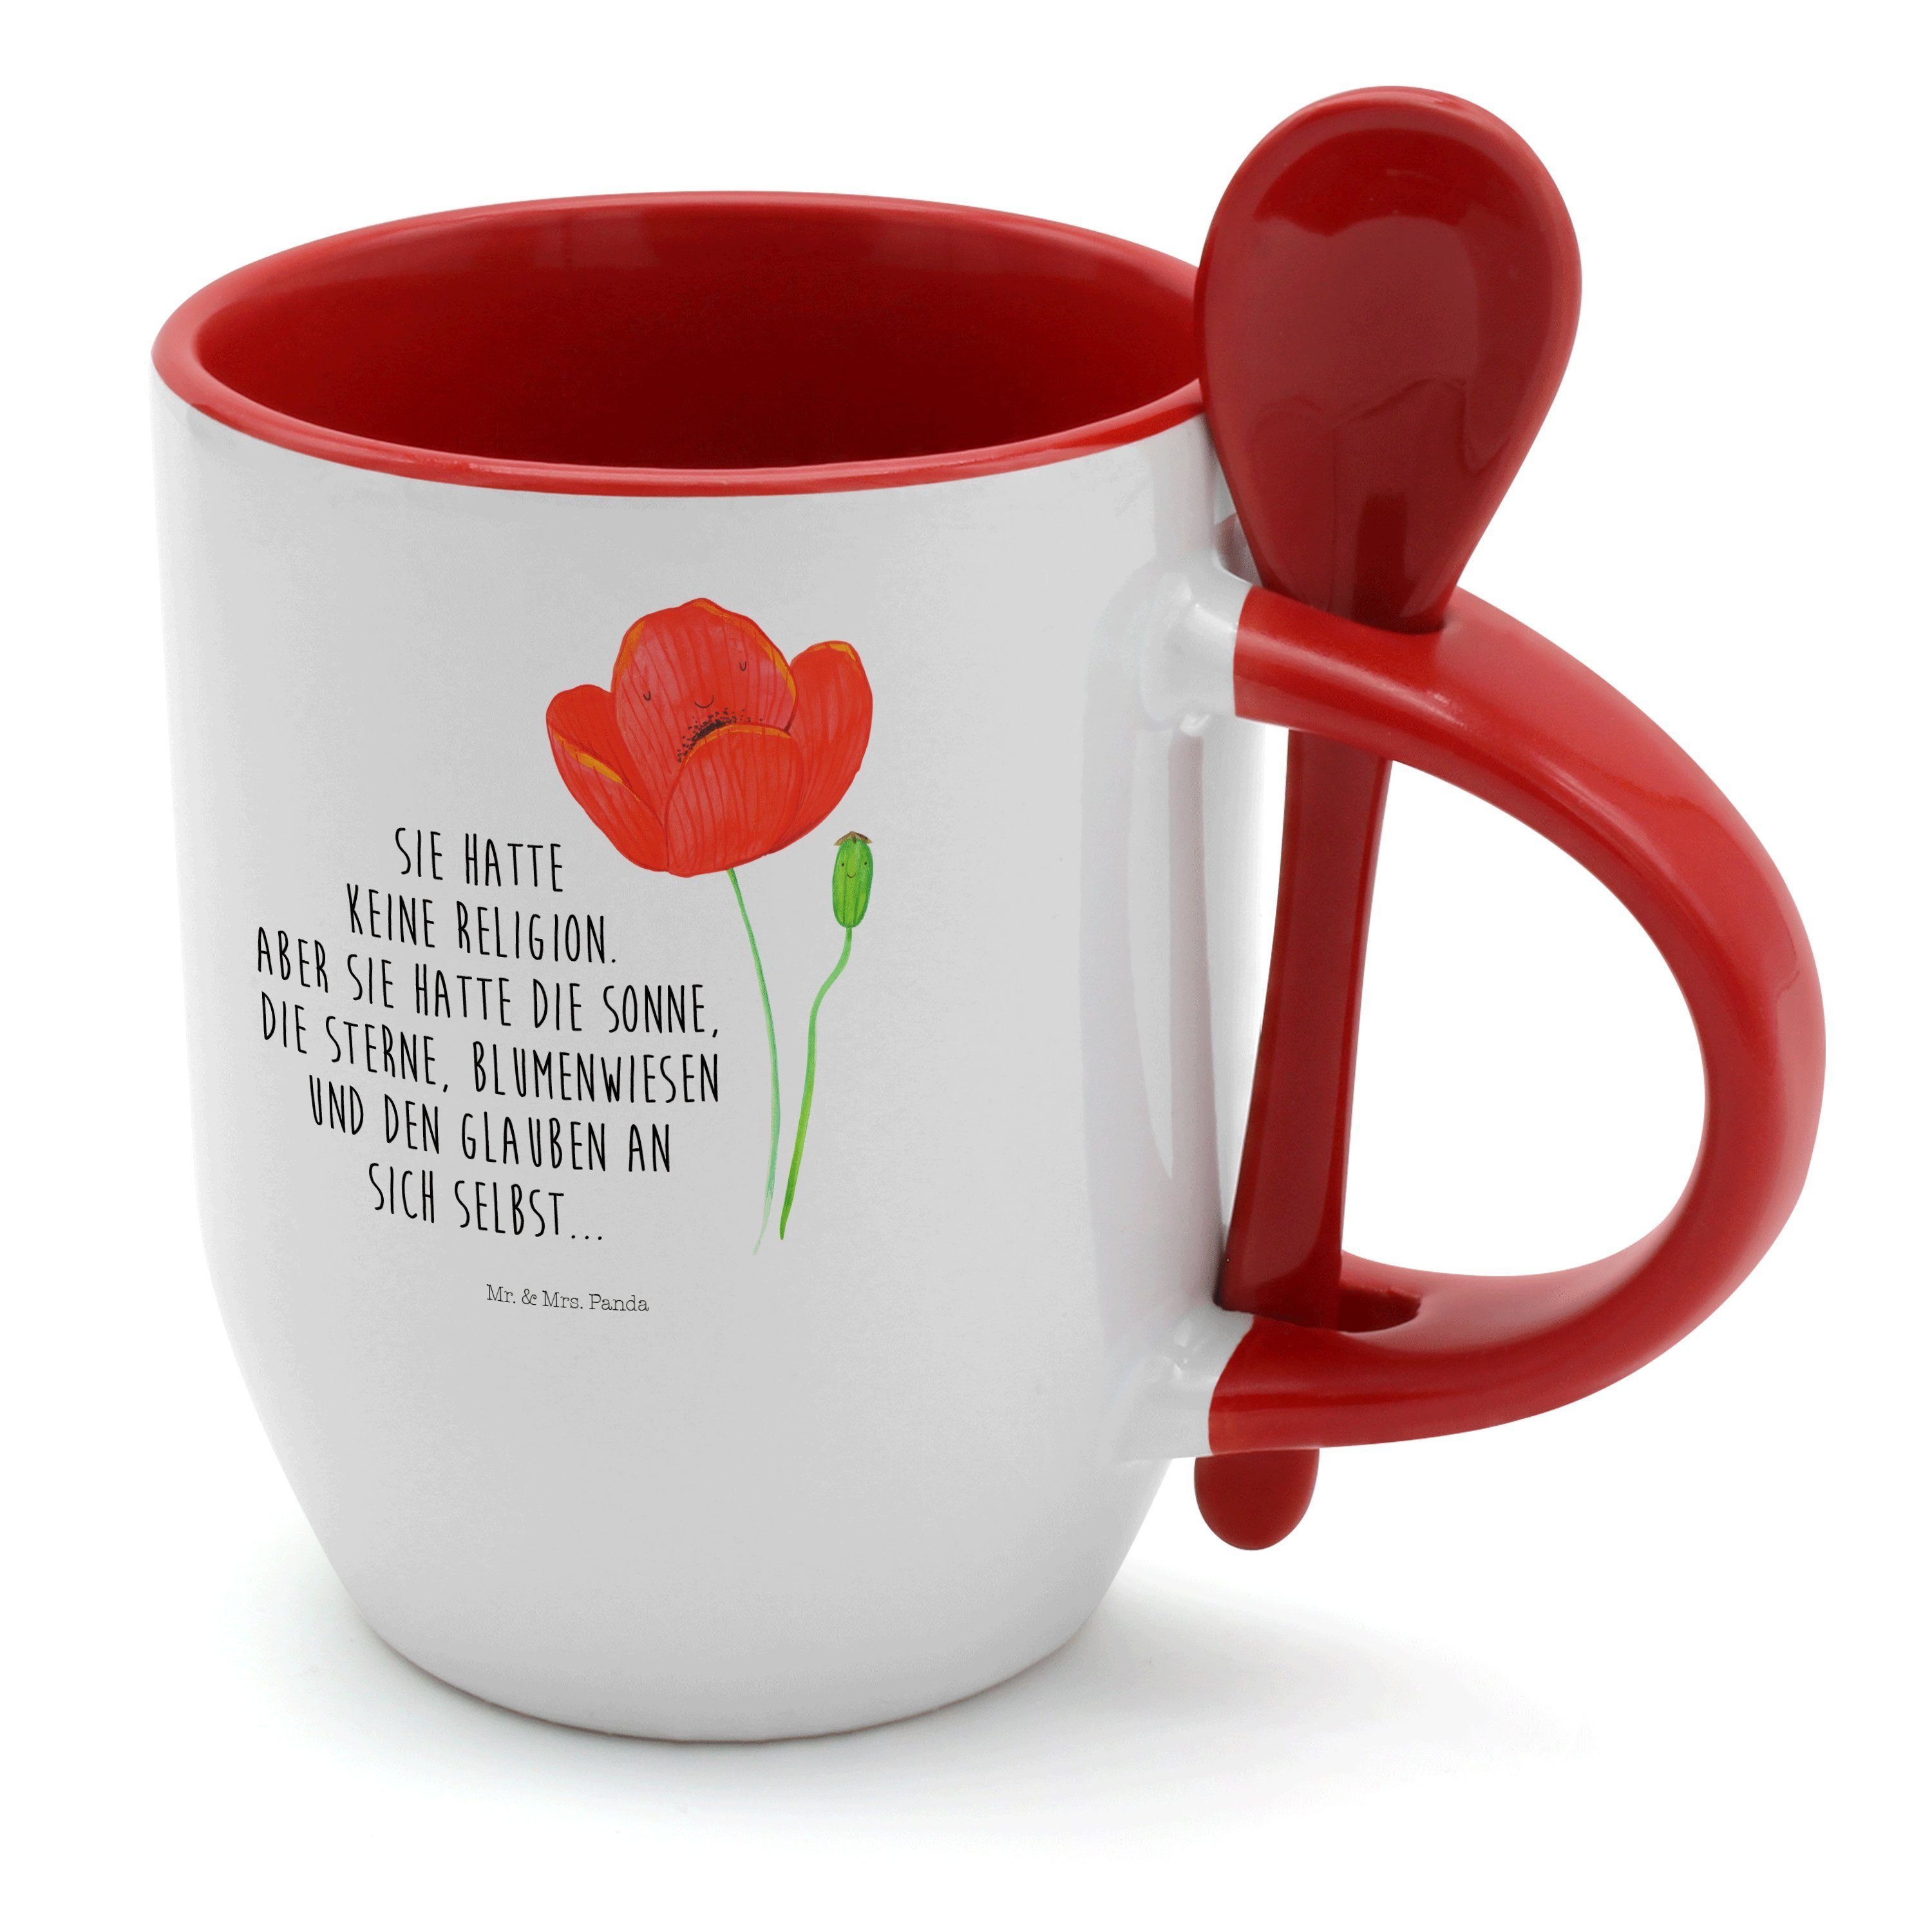 Mr. & Mrs. Panda Tasse Blume Mohnblume - Weiß - Geschenk, Kaffeebecher, Tasse, Tasse mit Löf, Keramik, Charmanter Keramik-Löffel